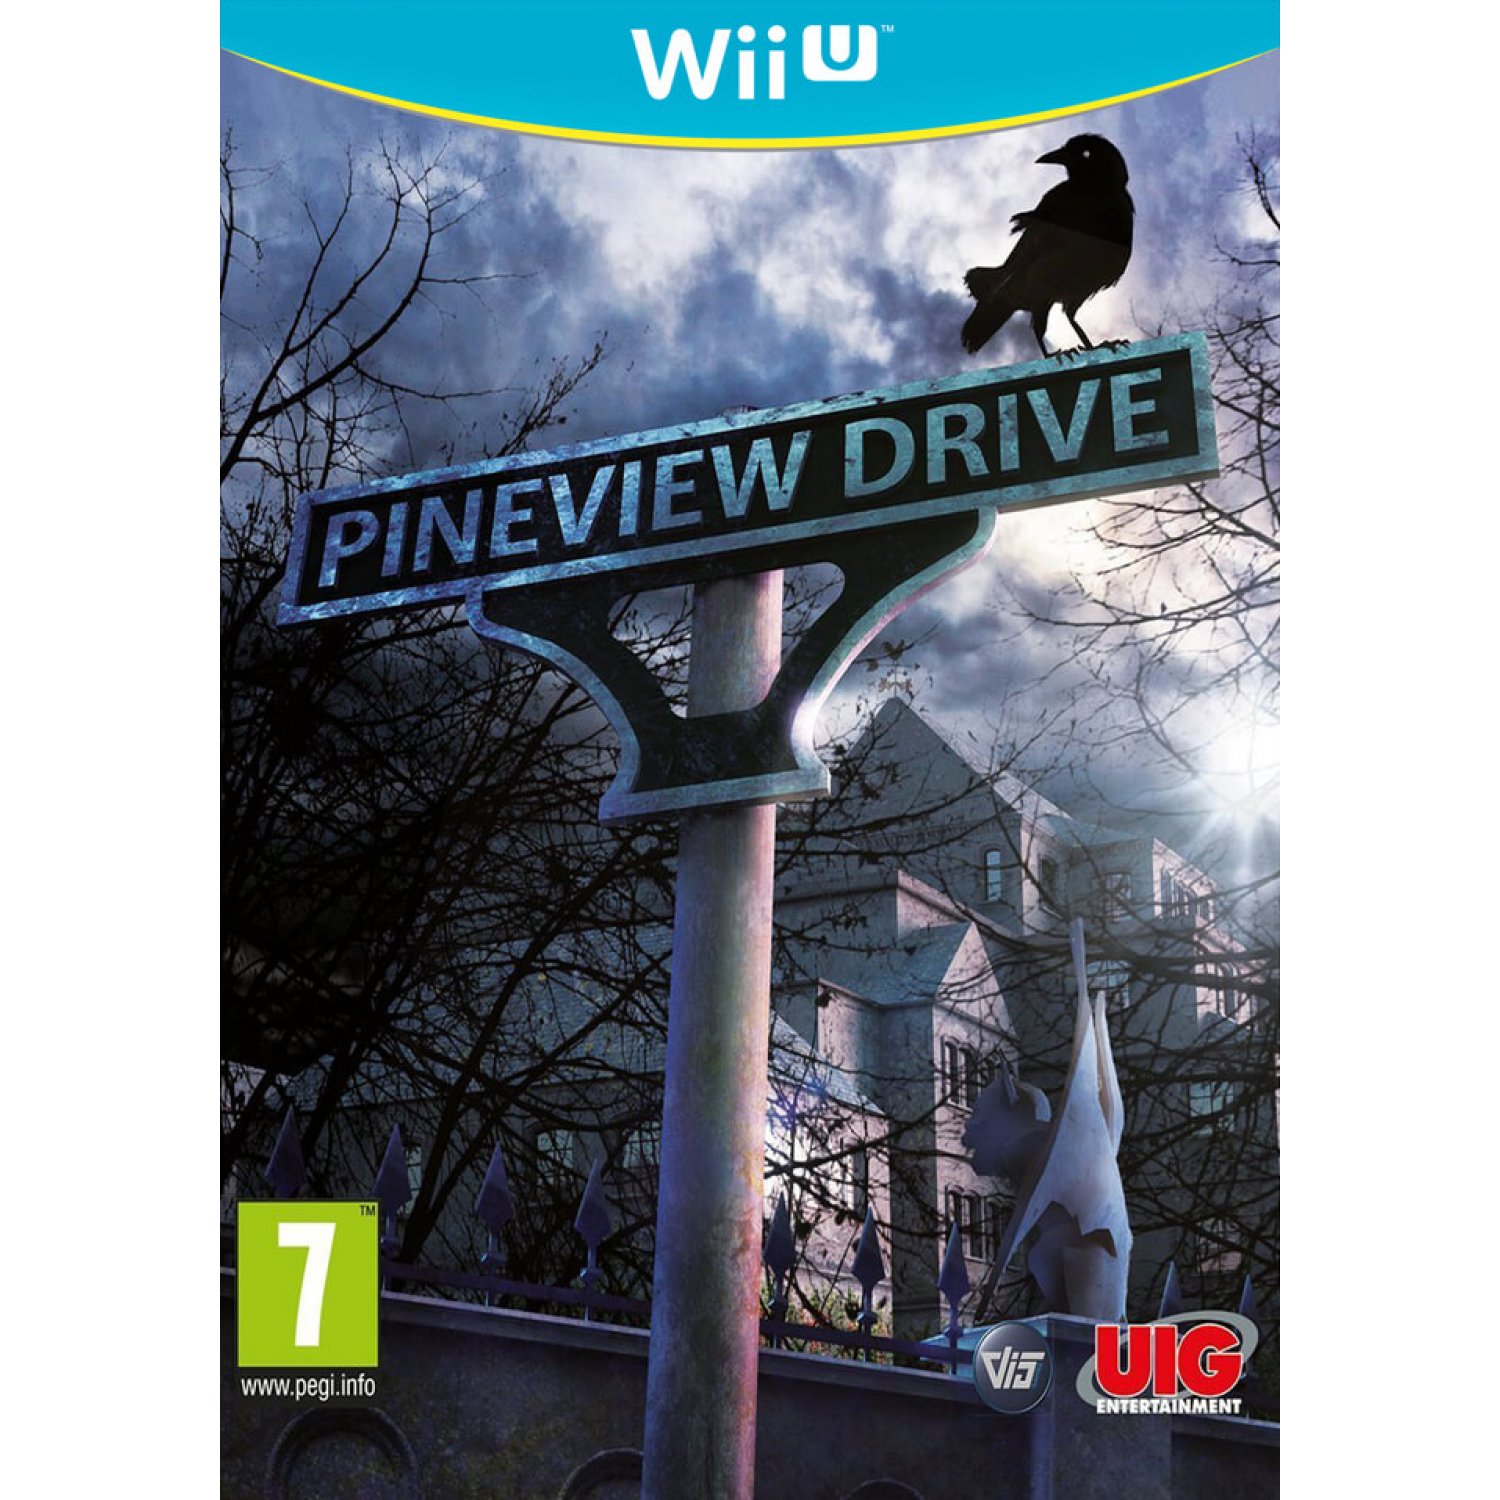 Pineview Drive (Wiiu), UIG International GmbH